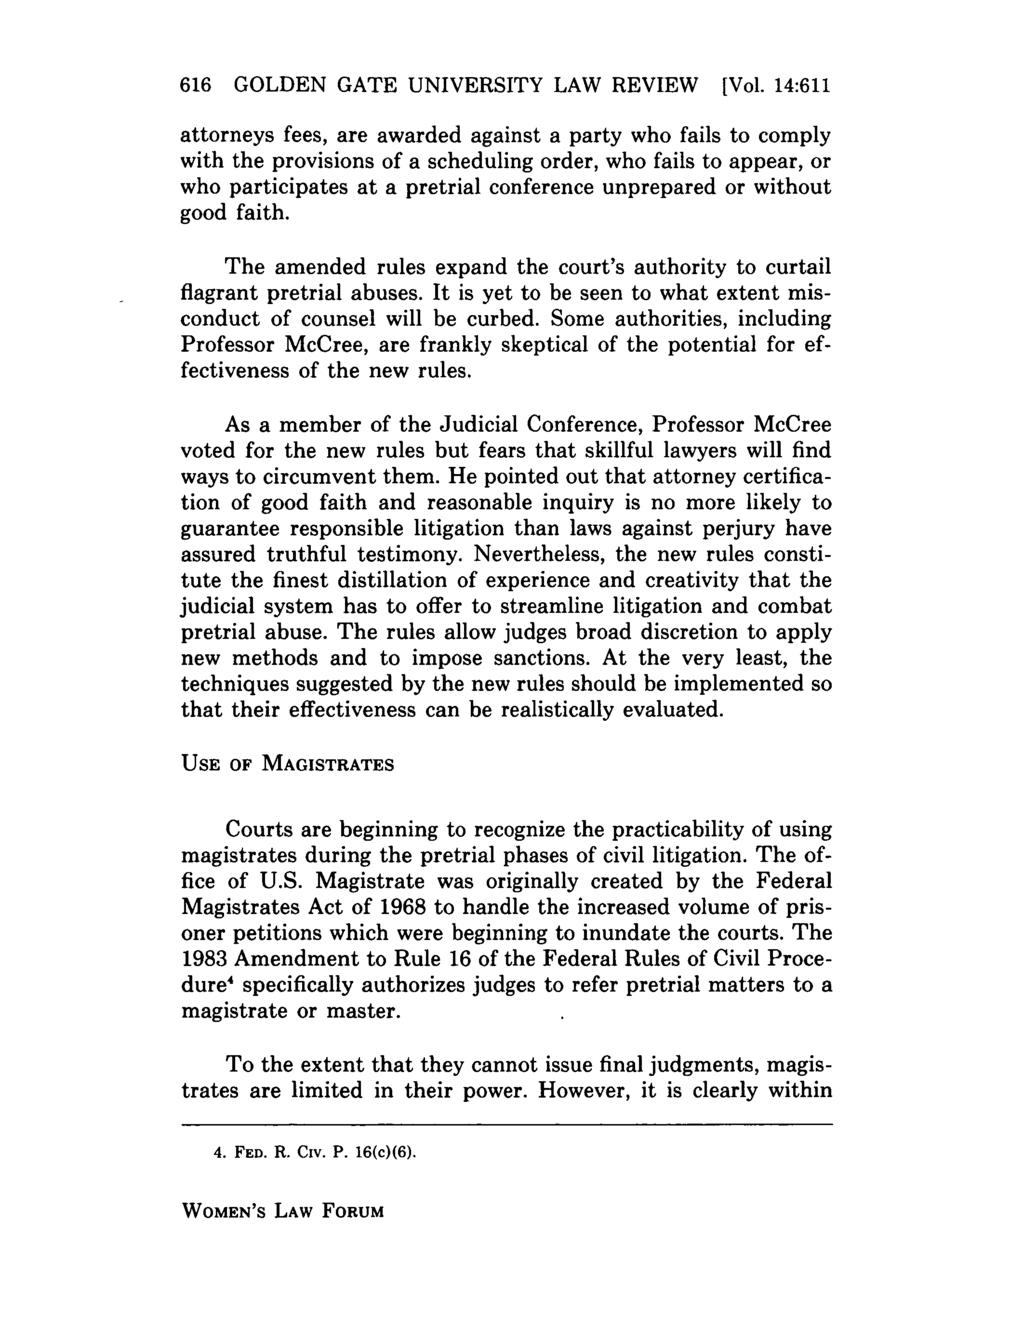 Golden Gate University Law Review, Vol. 14, Iss. 3 [1984], Art. 8 616 GOLDEN GATE UNIVERSITY LAW REVIEW [Vol.